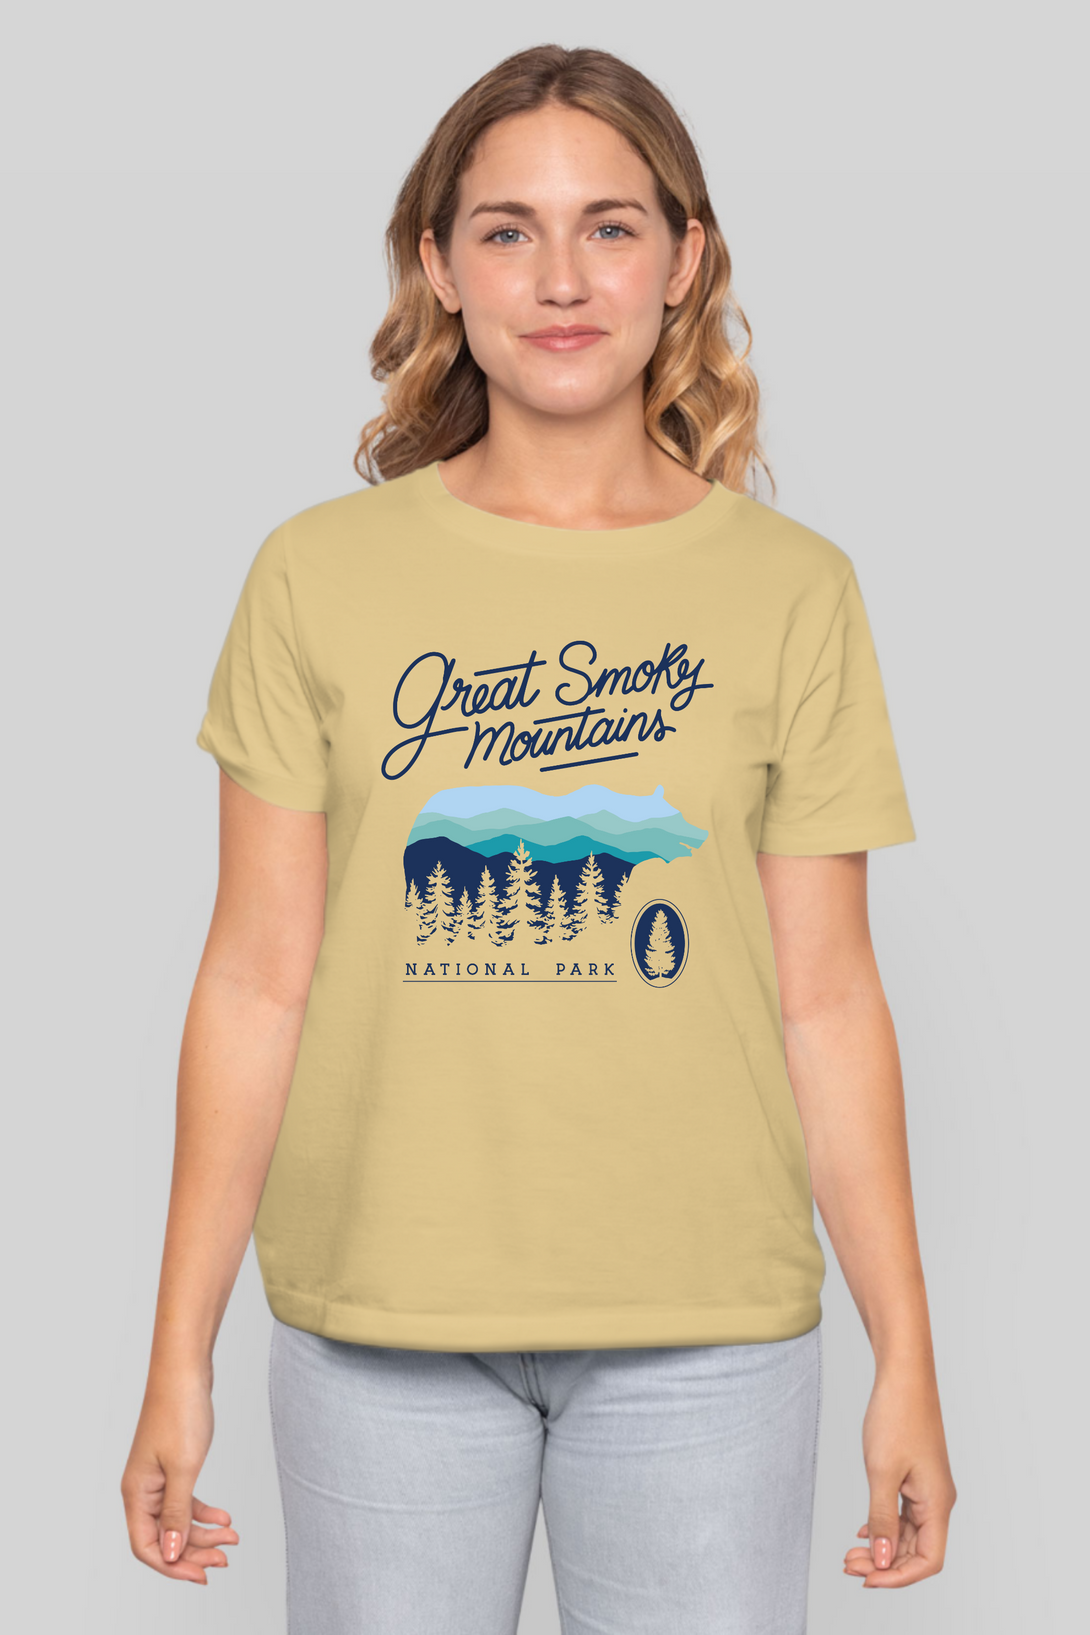 Smoky Summit Printed T-Shirt For Women - WowWaves - 10